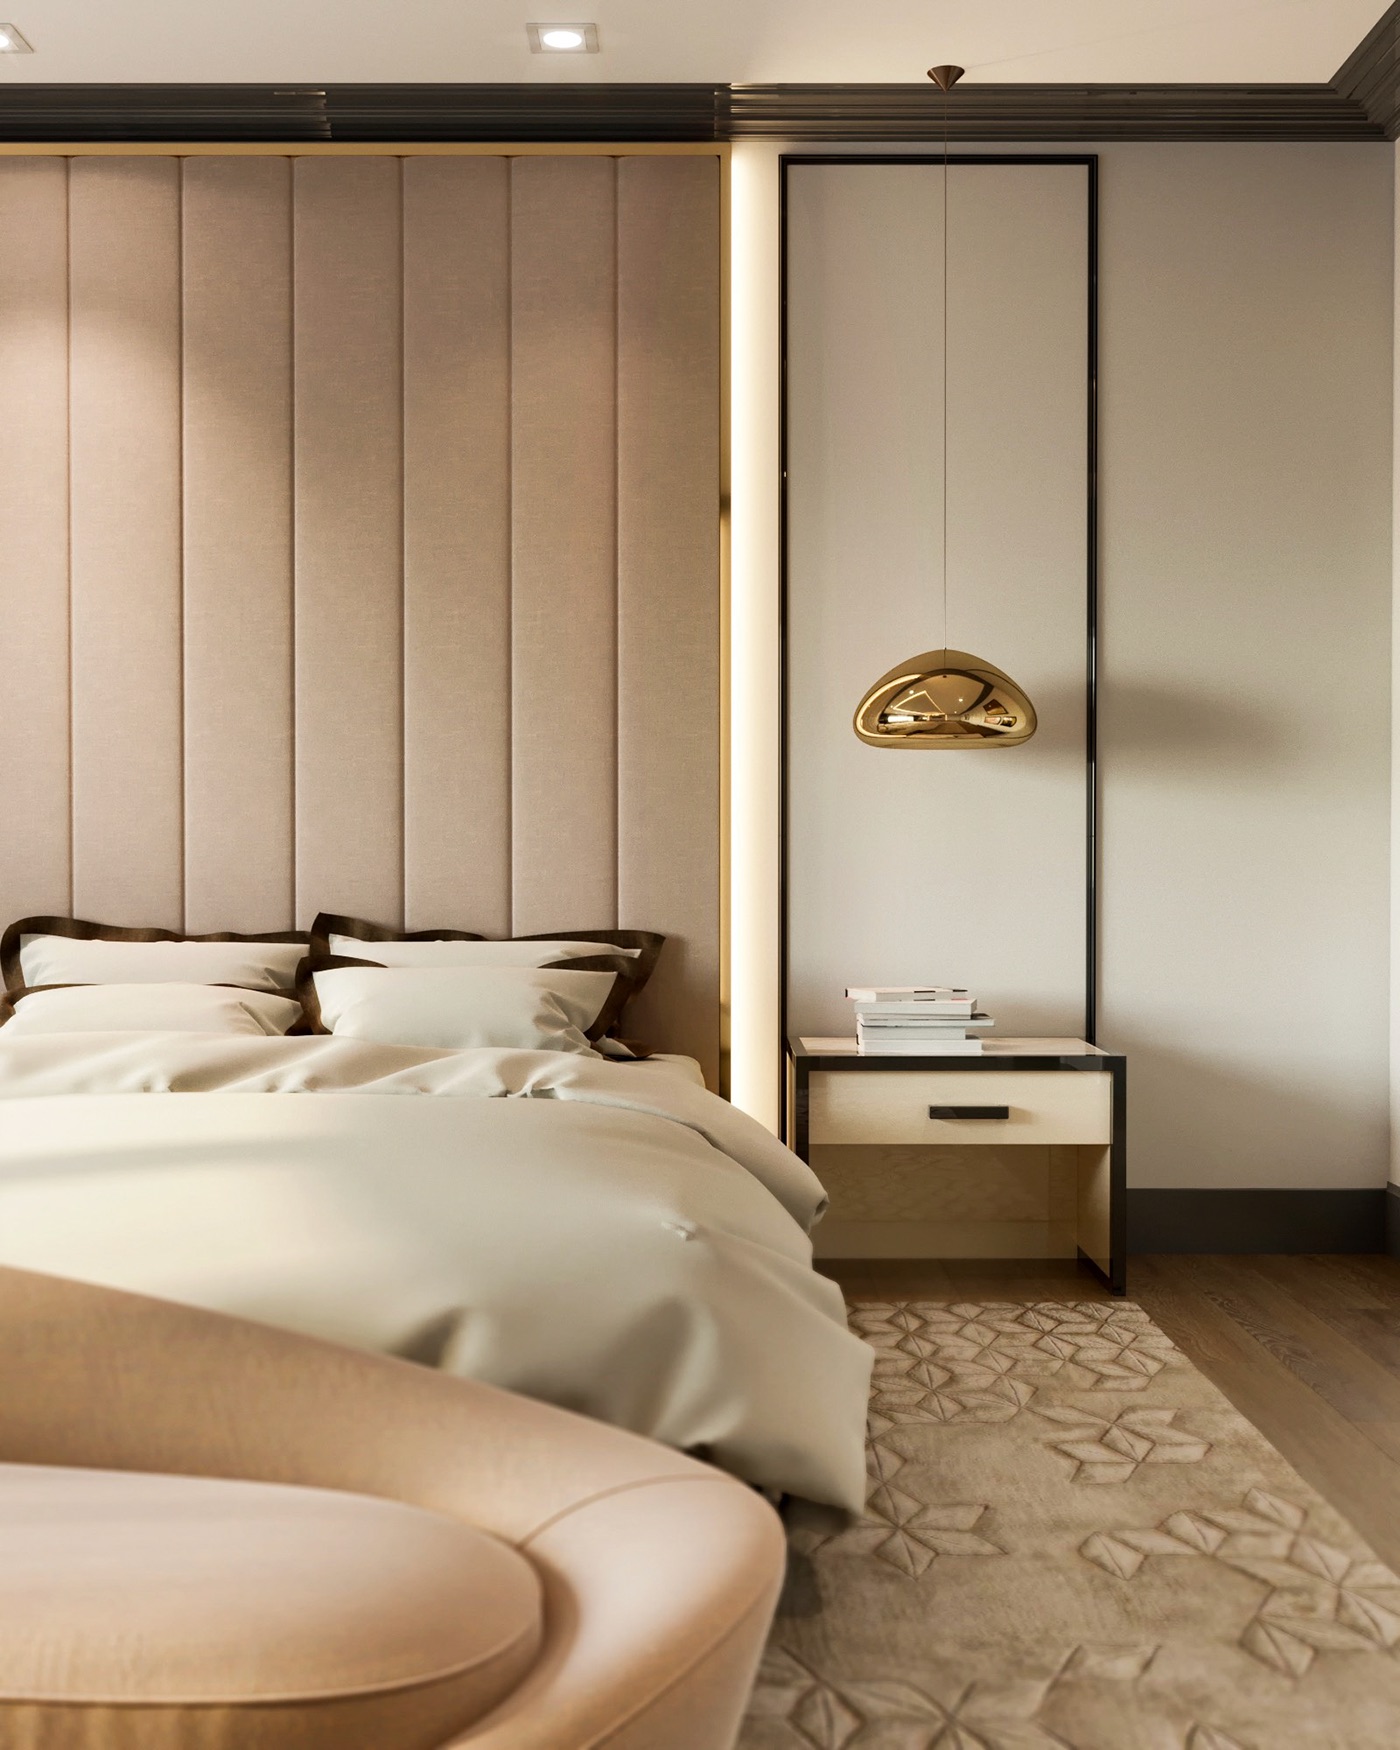 bedroom Interior apartaments interiordesign decoration ArchitecturalVisualisations homestyle Project